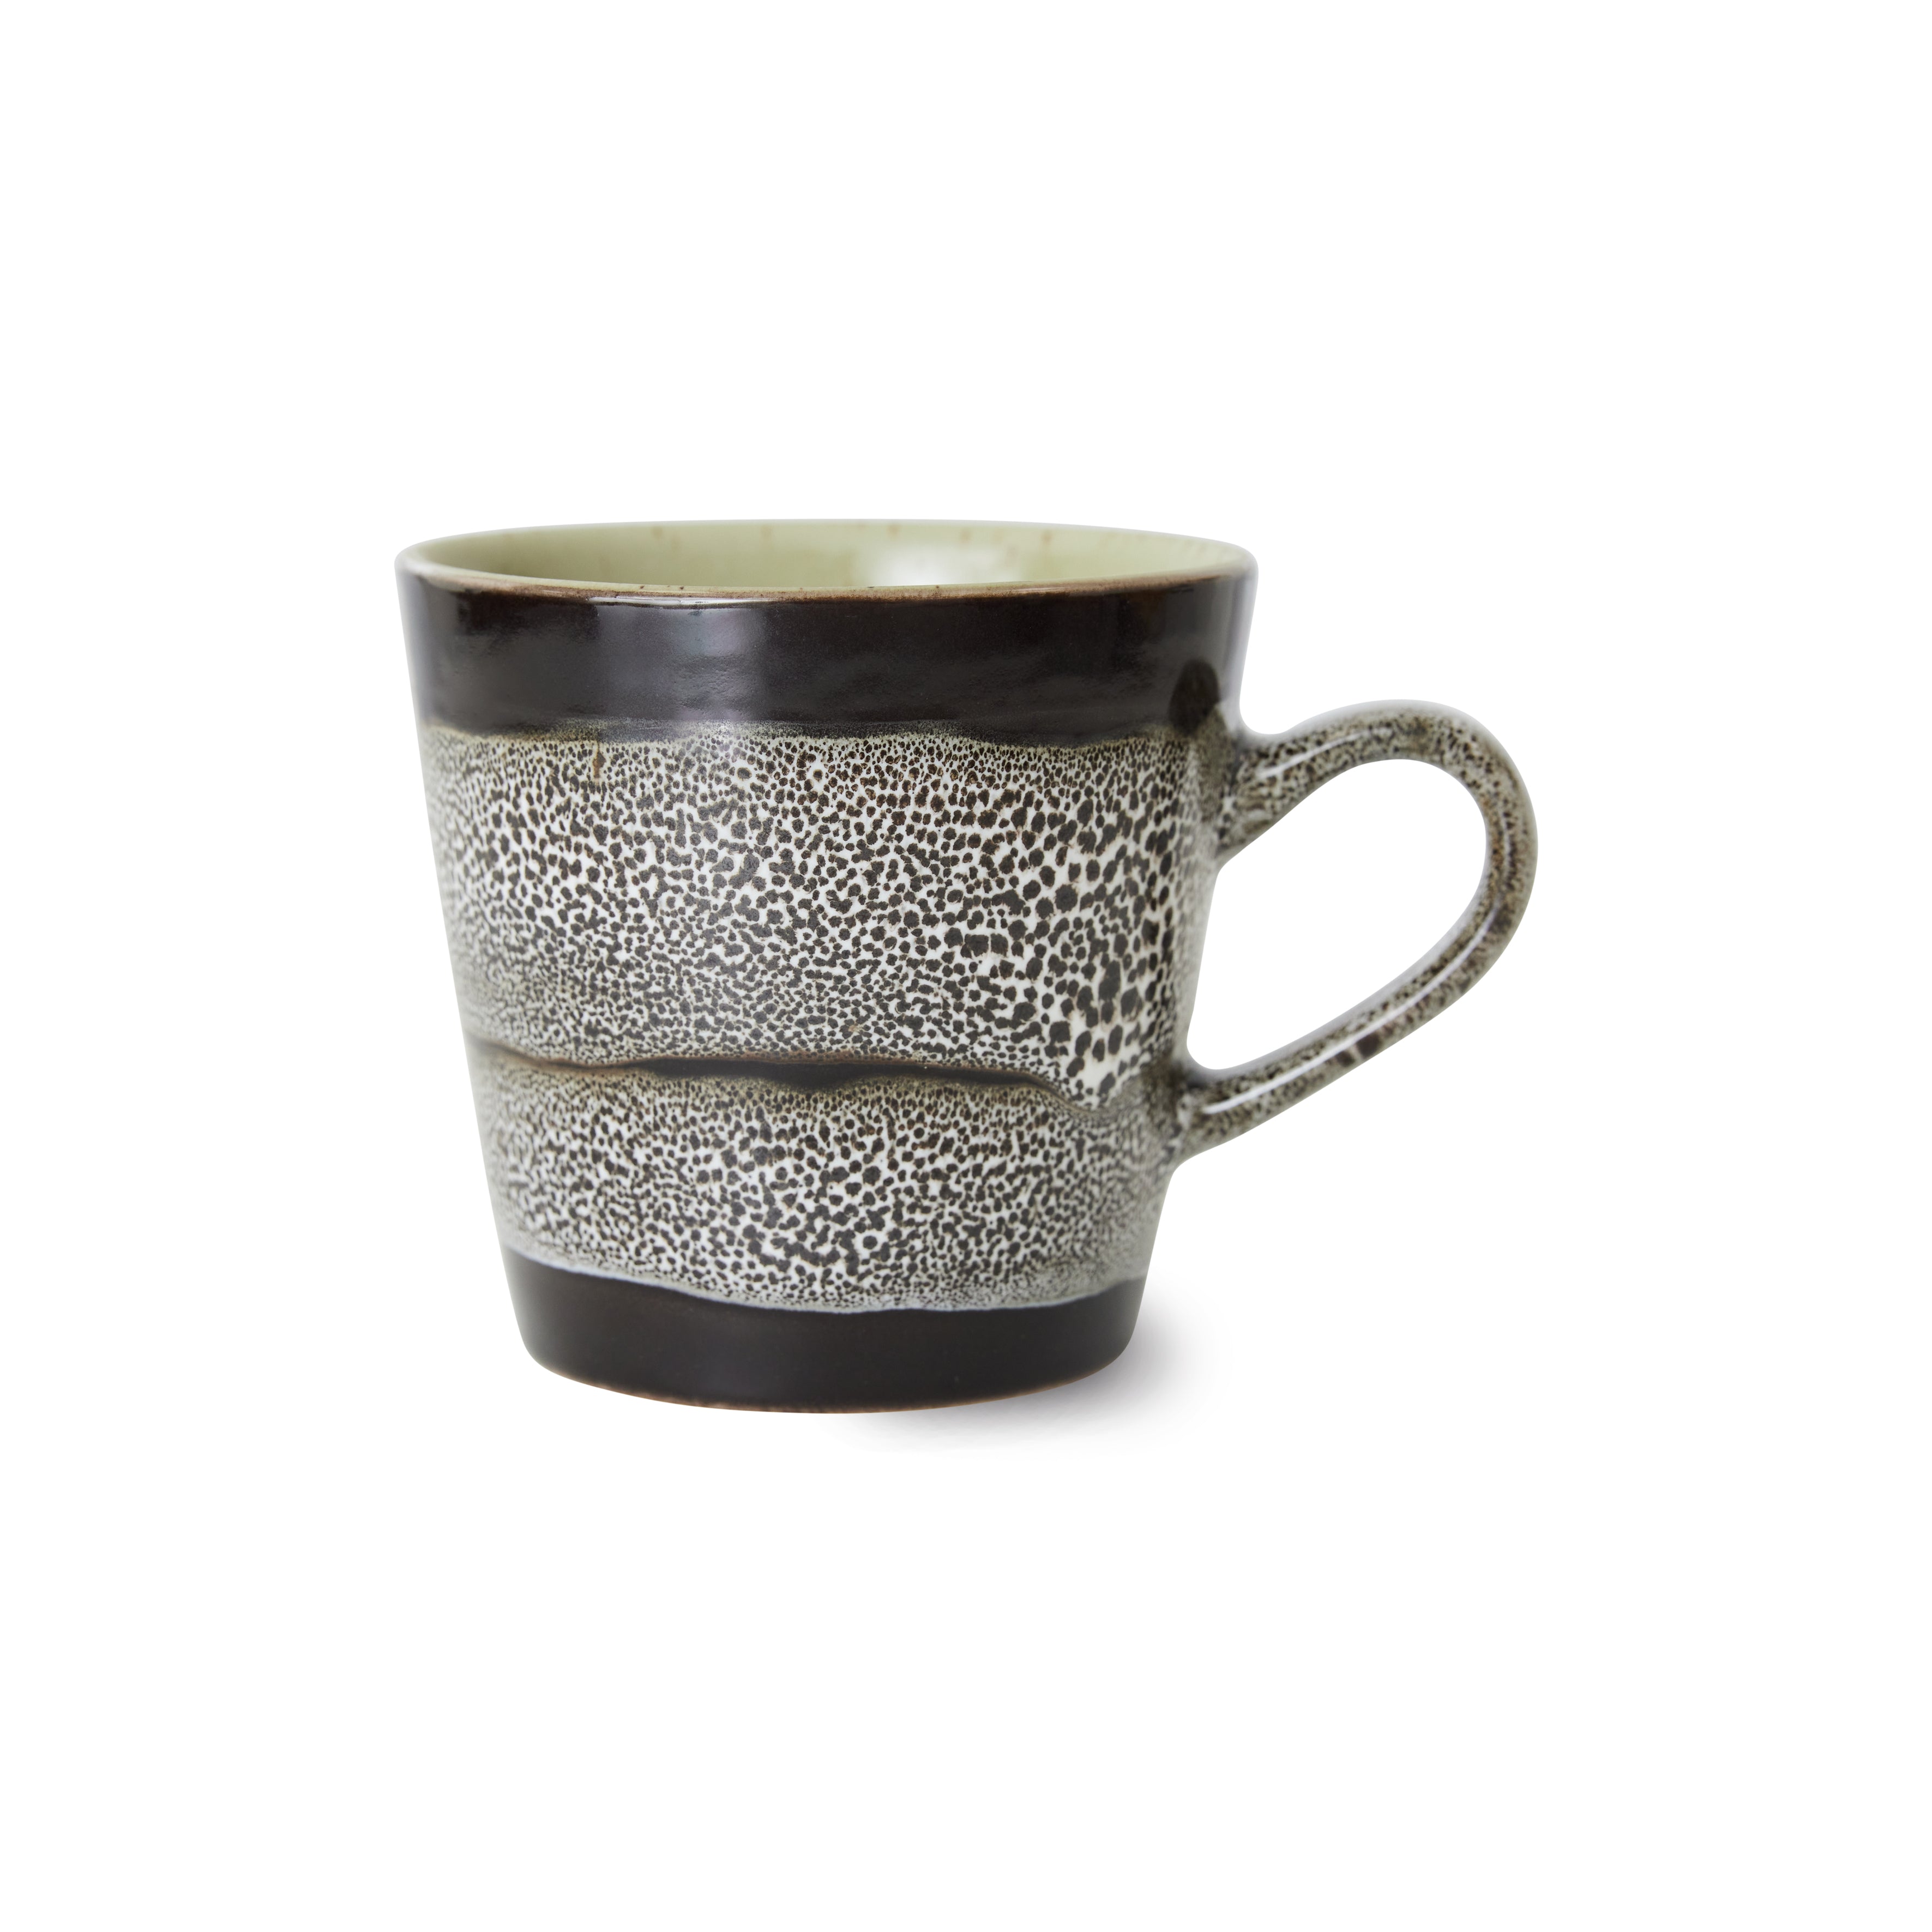 70s ceramics: americano mug, rock on